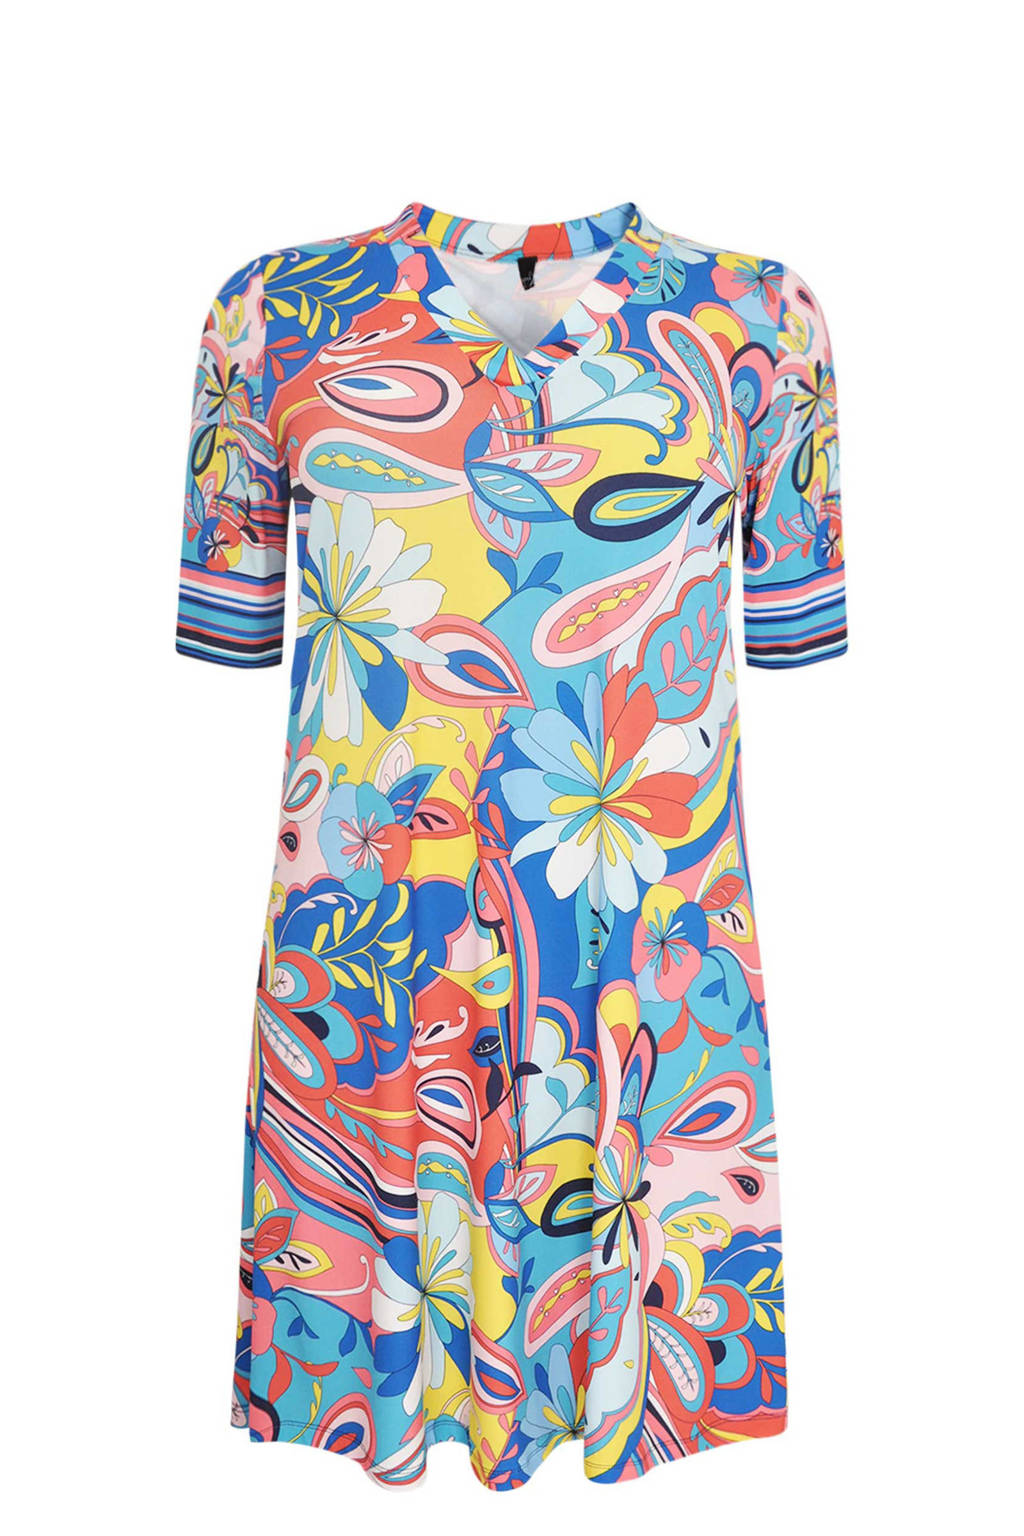 Yoek jurk met all over print lichtblauw/geel/koraalrood